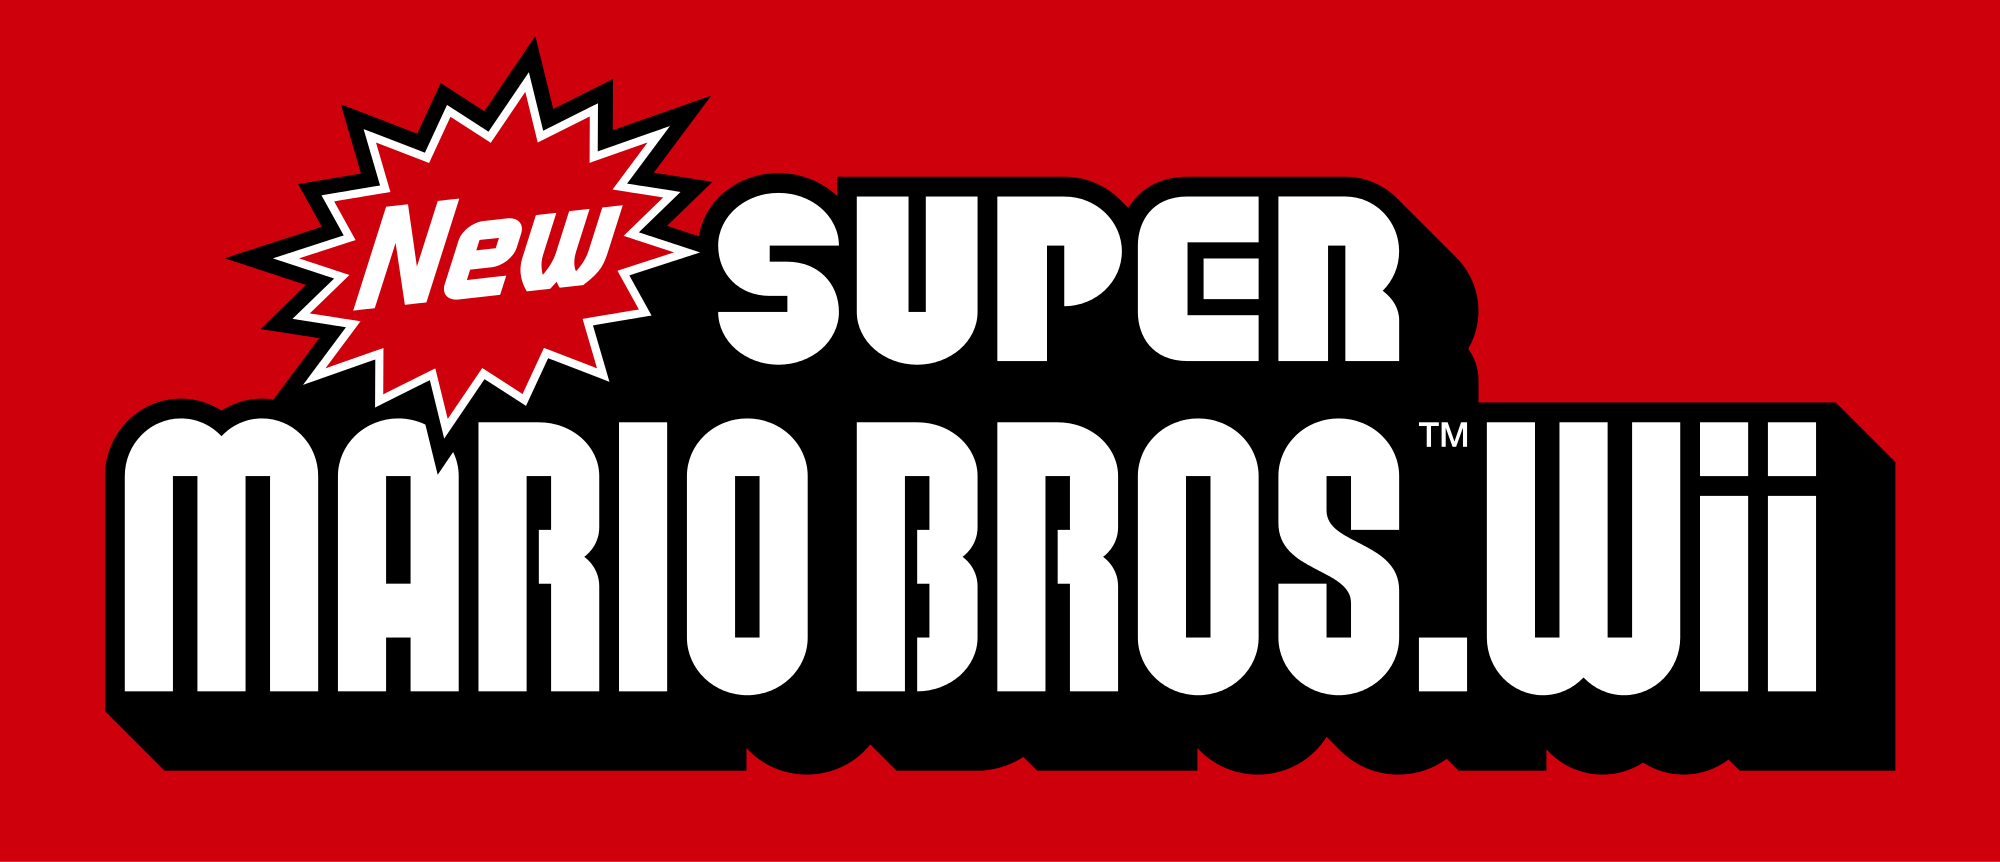 New Super Mario Bros. Logo - File:New Super Mario Bros. Wii logo.svg - Wikimedia Commons